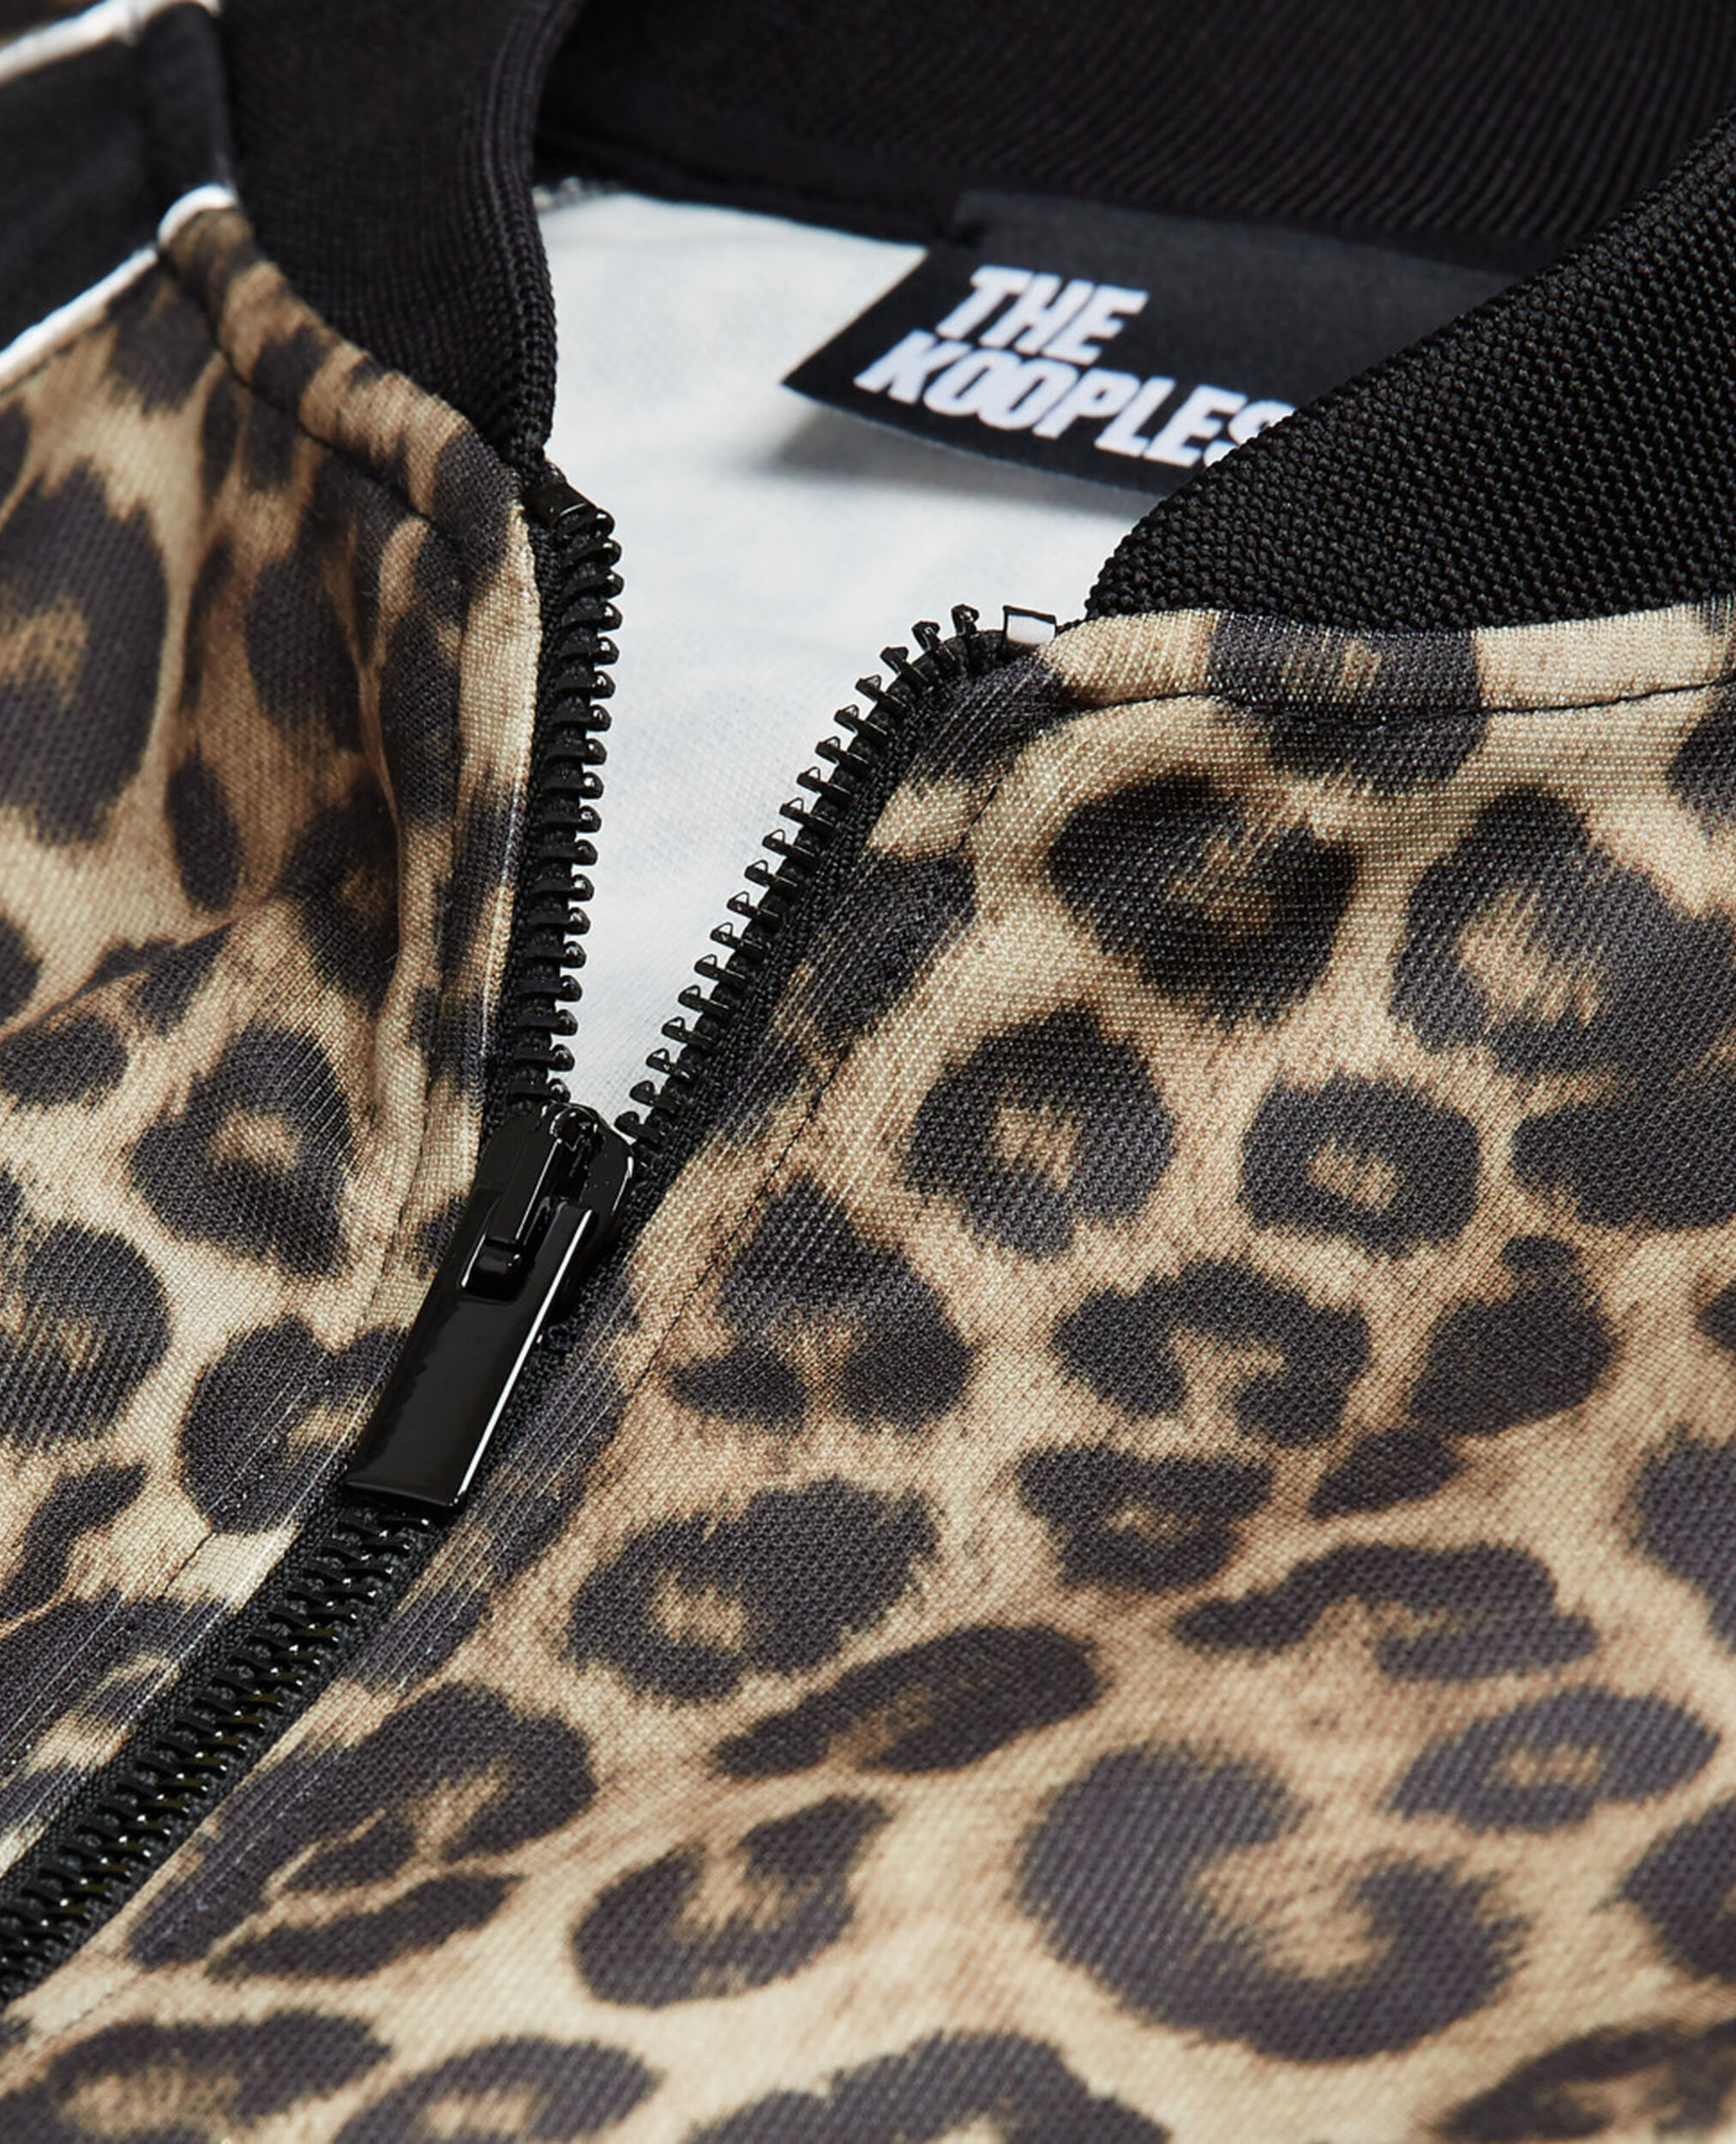 Leopard zipped sweatshirt, LEOPARD, hi-res image number null